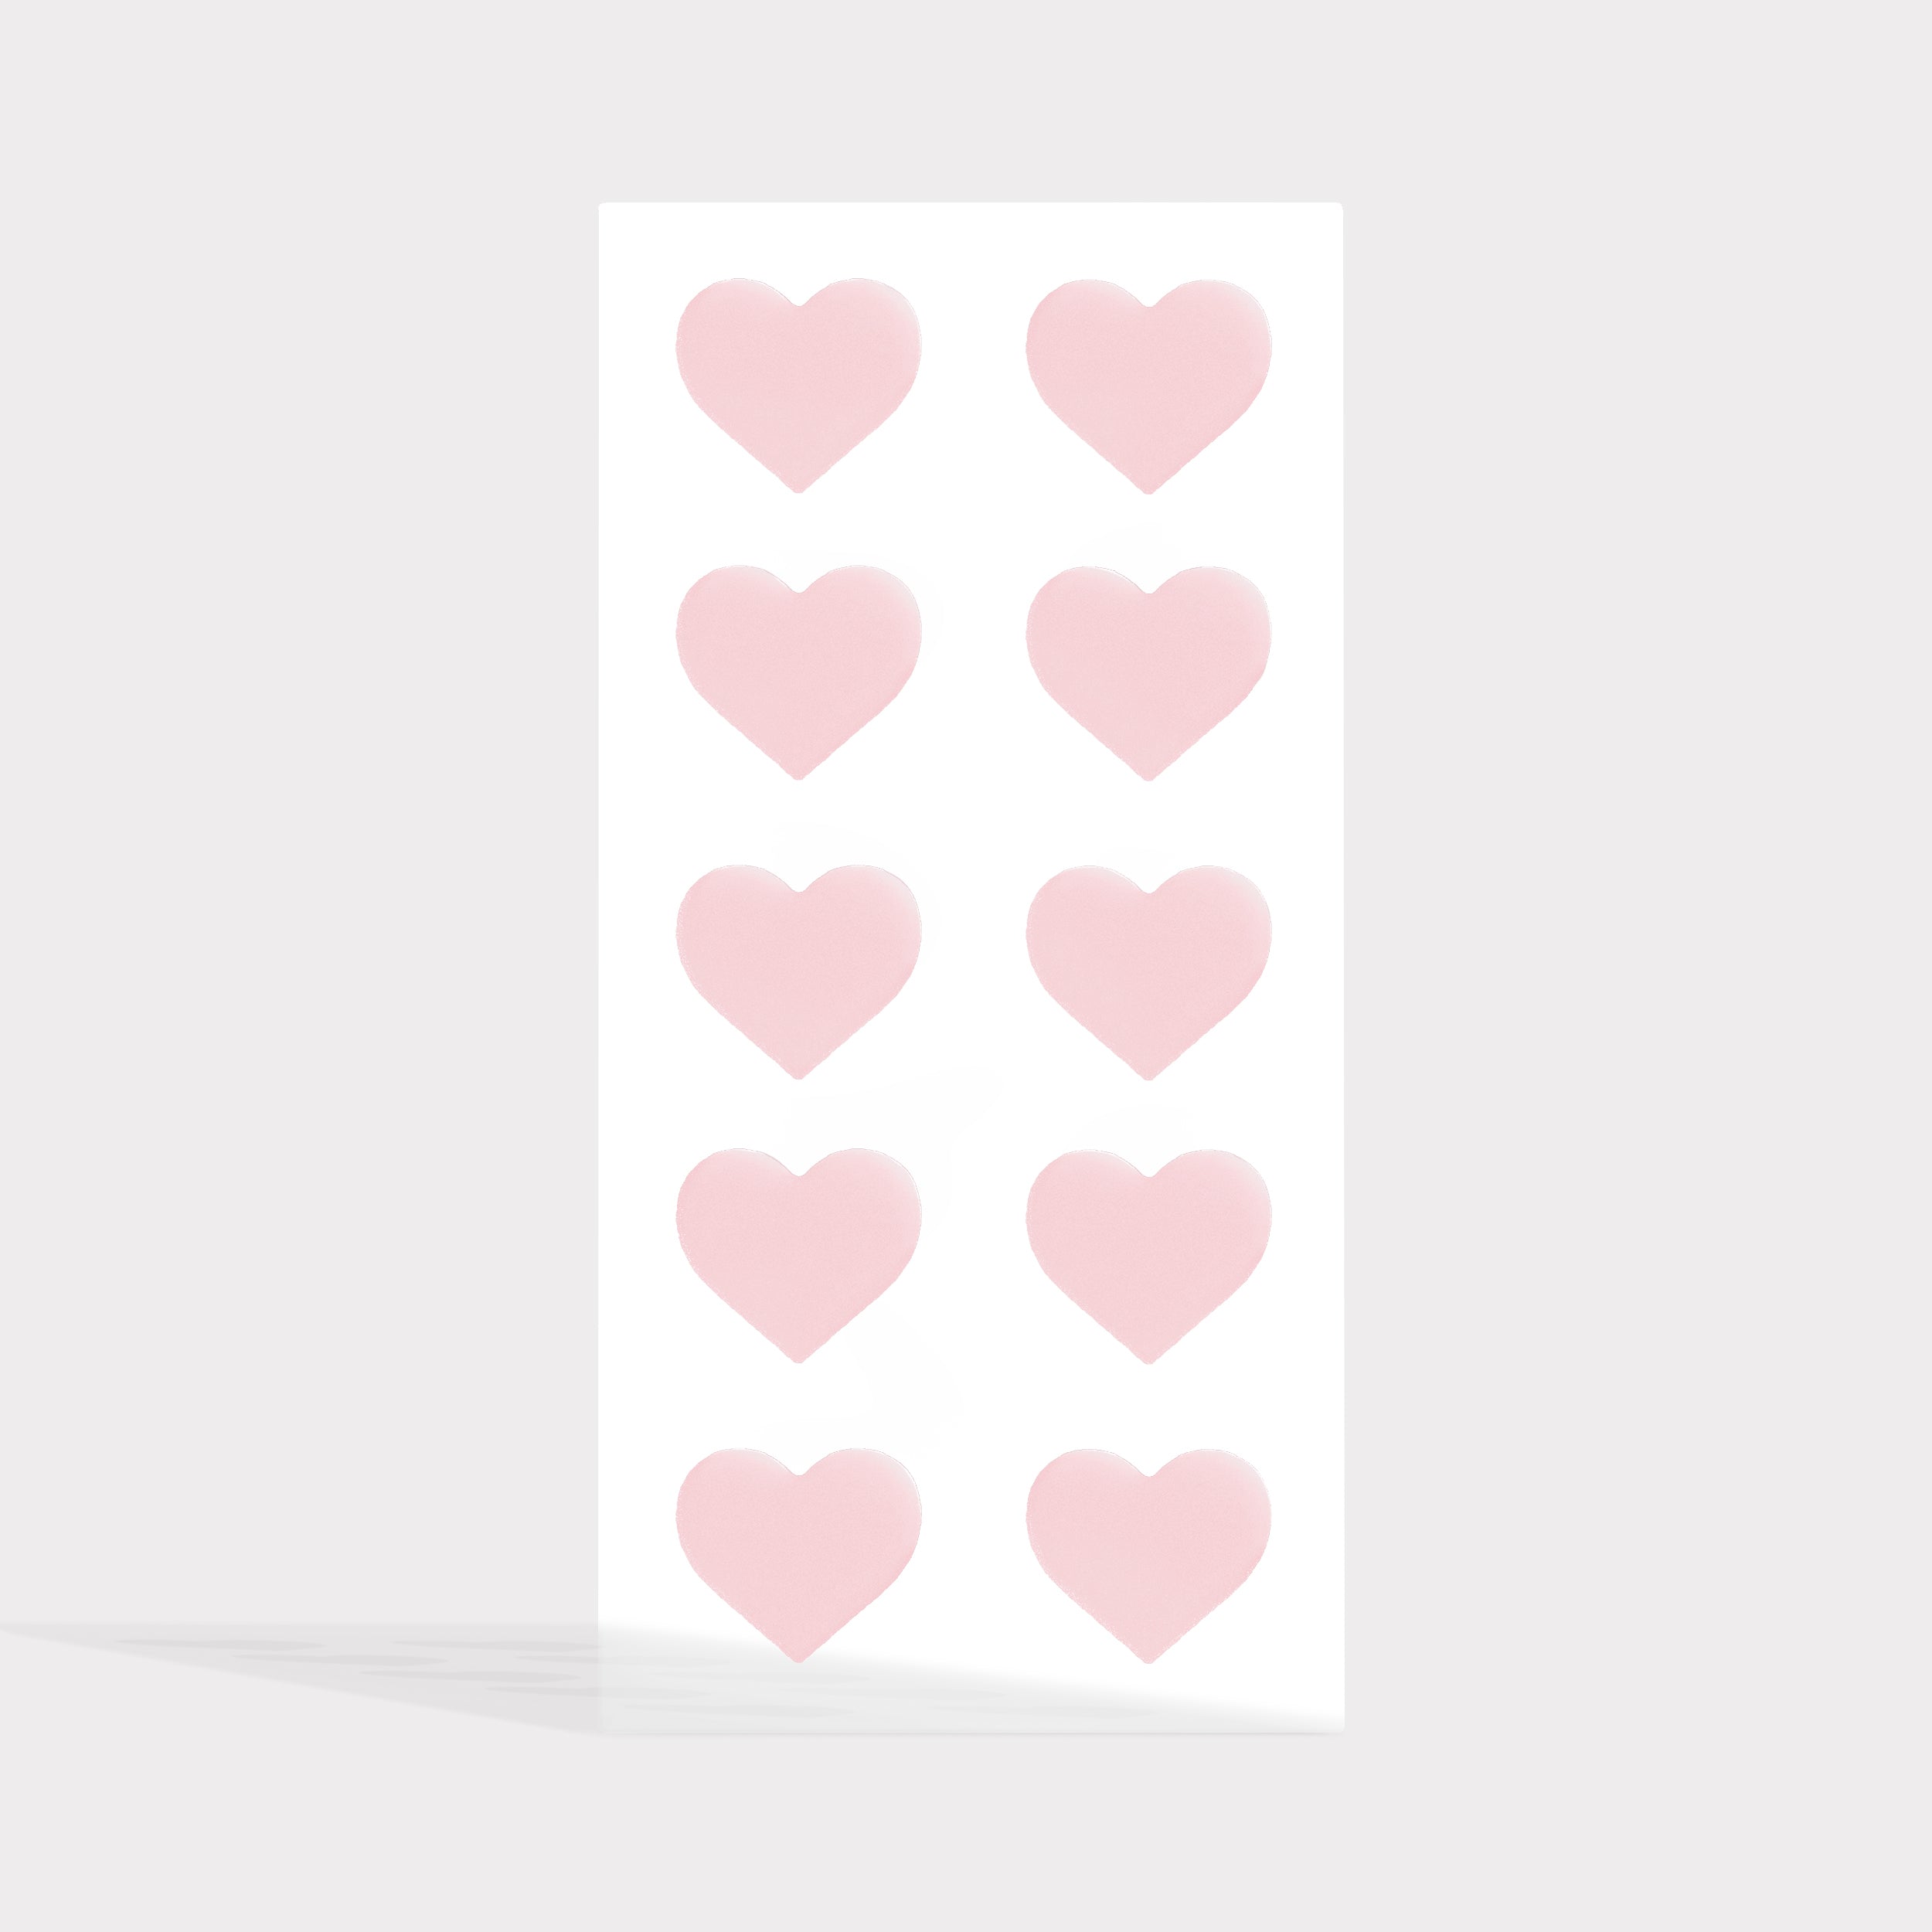 Pink Heart Sticker Patch